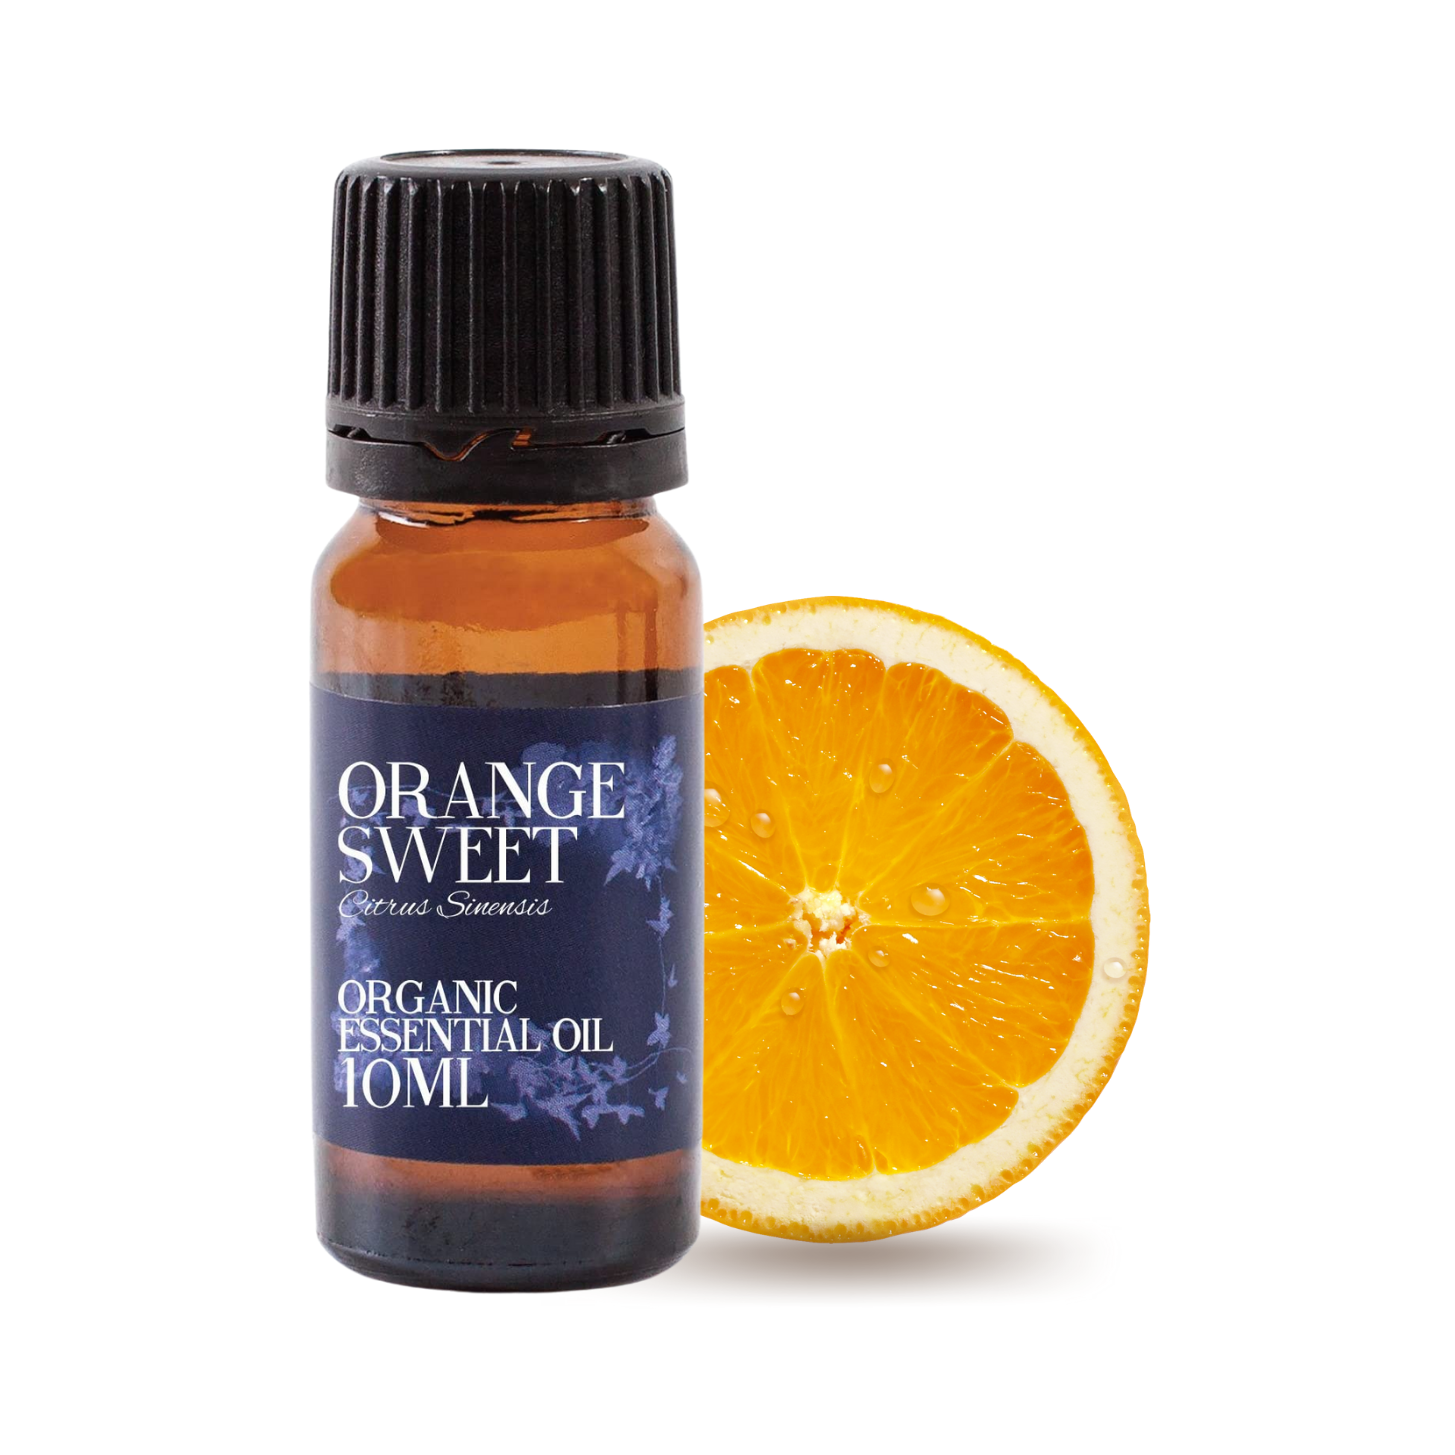 Sensorii's aromatherapy - image of Sensorii's sweet orange essential oil bottle with an orange slice 